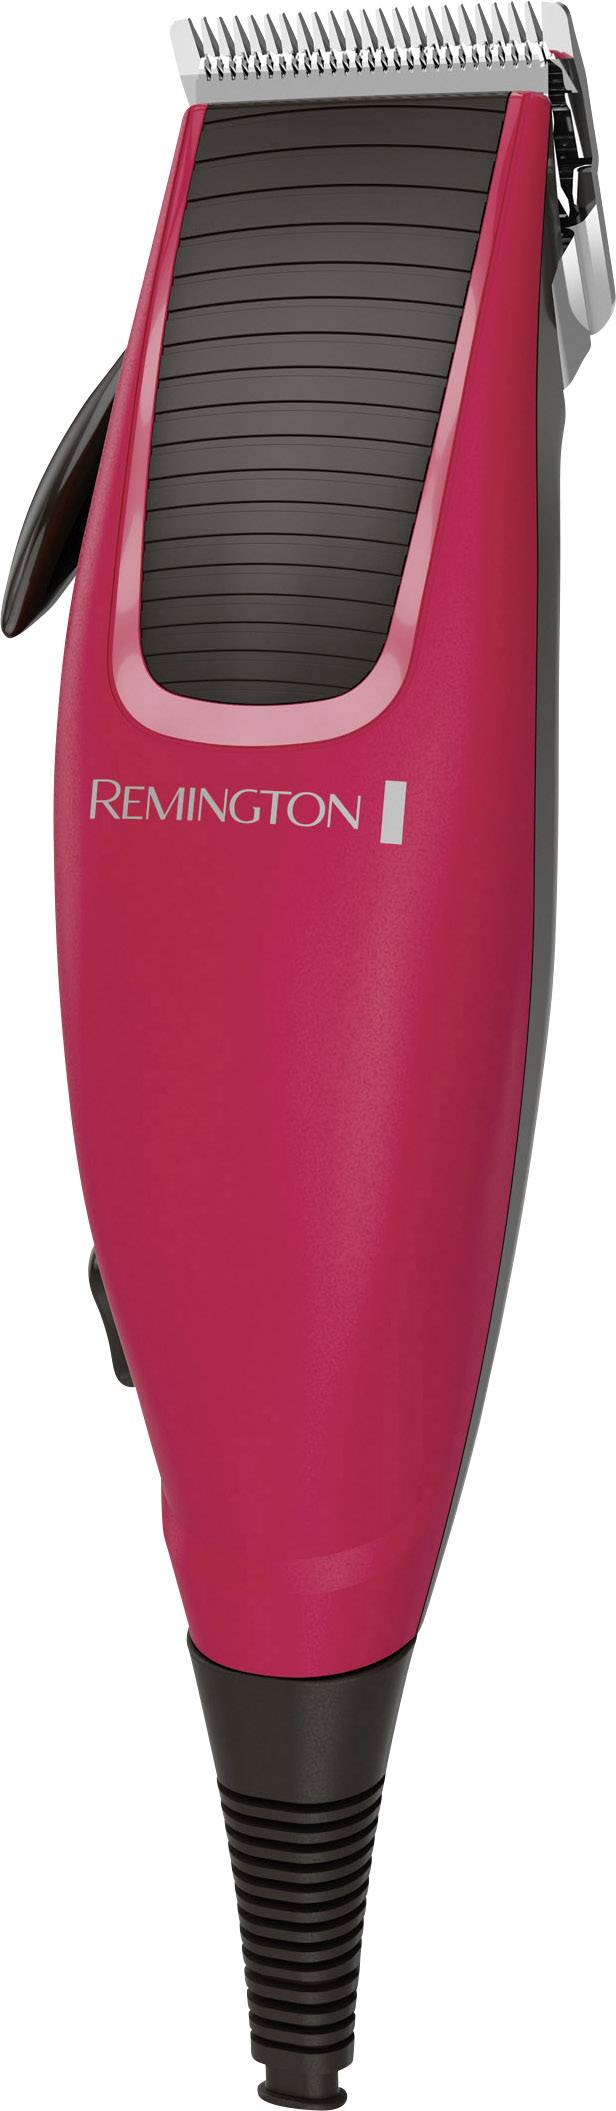 remington hc5018 apprentice hair clipper